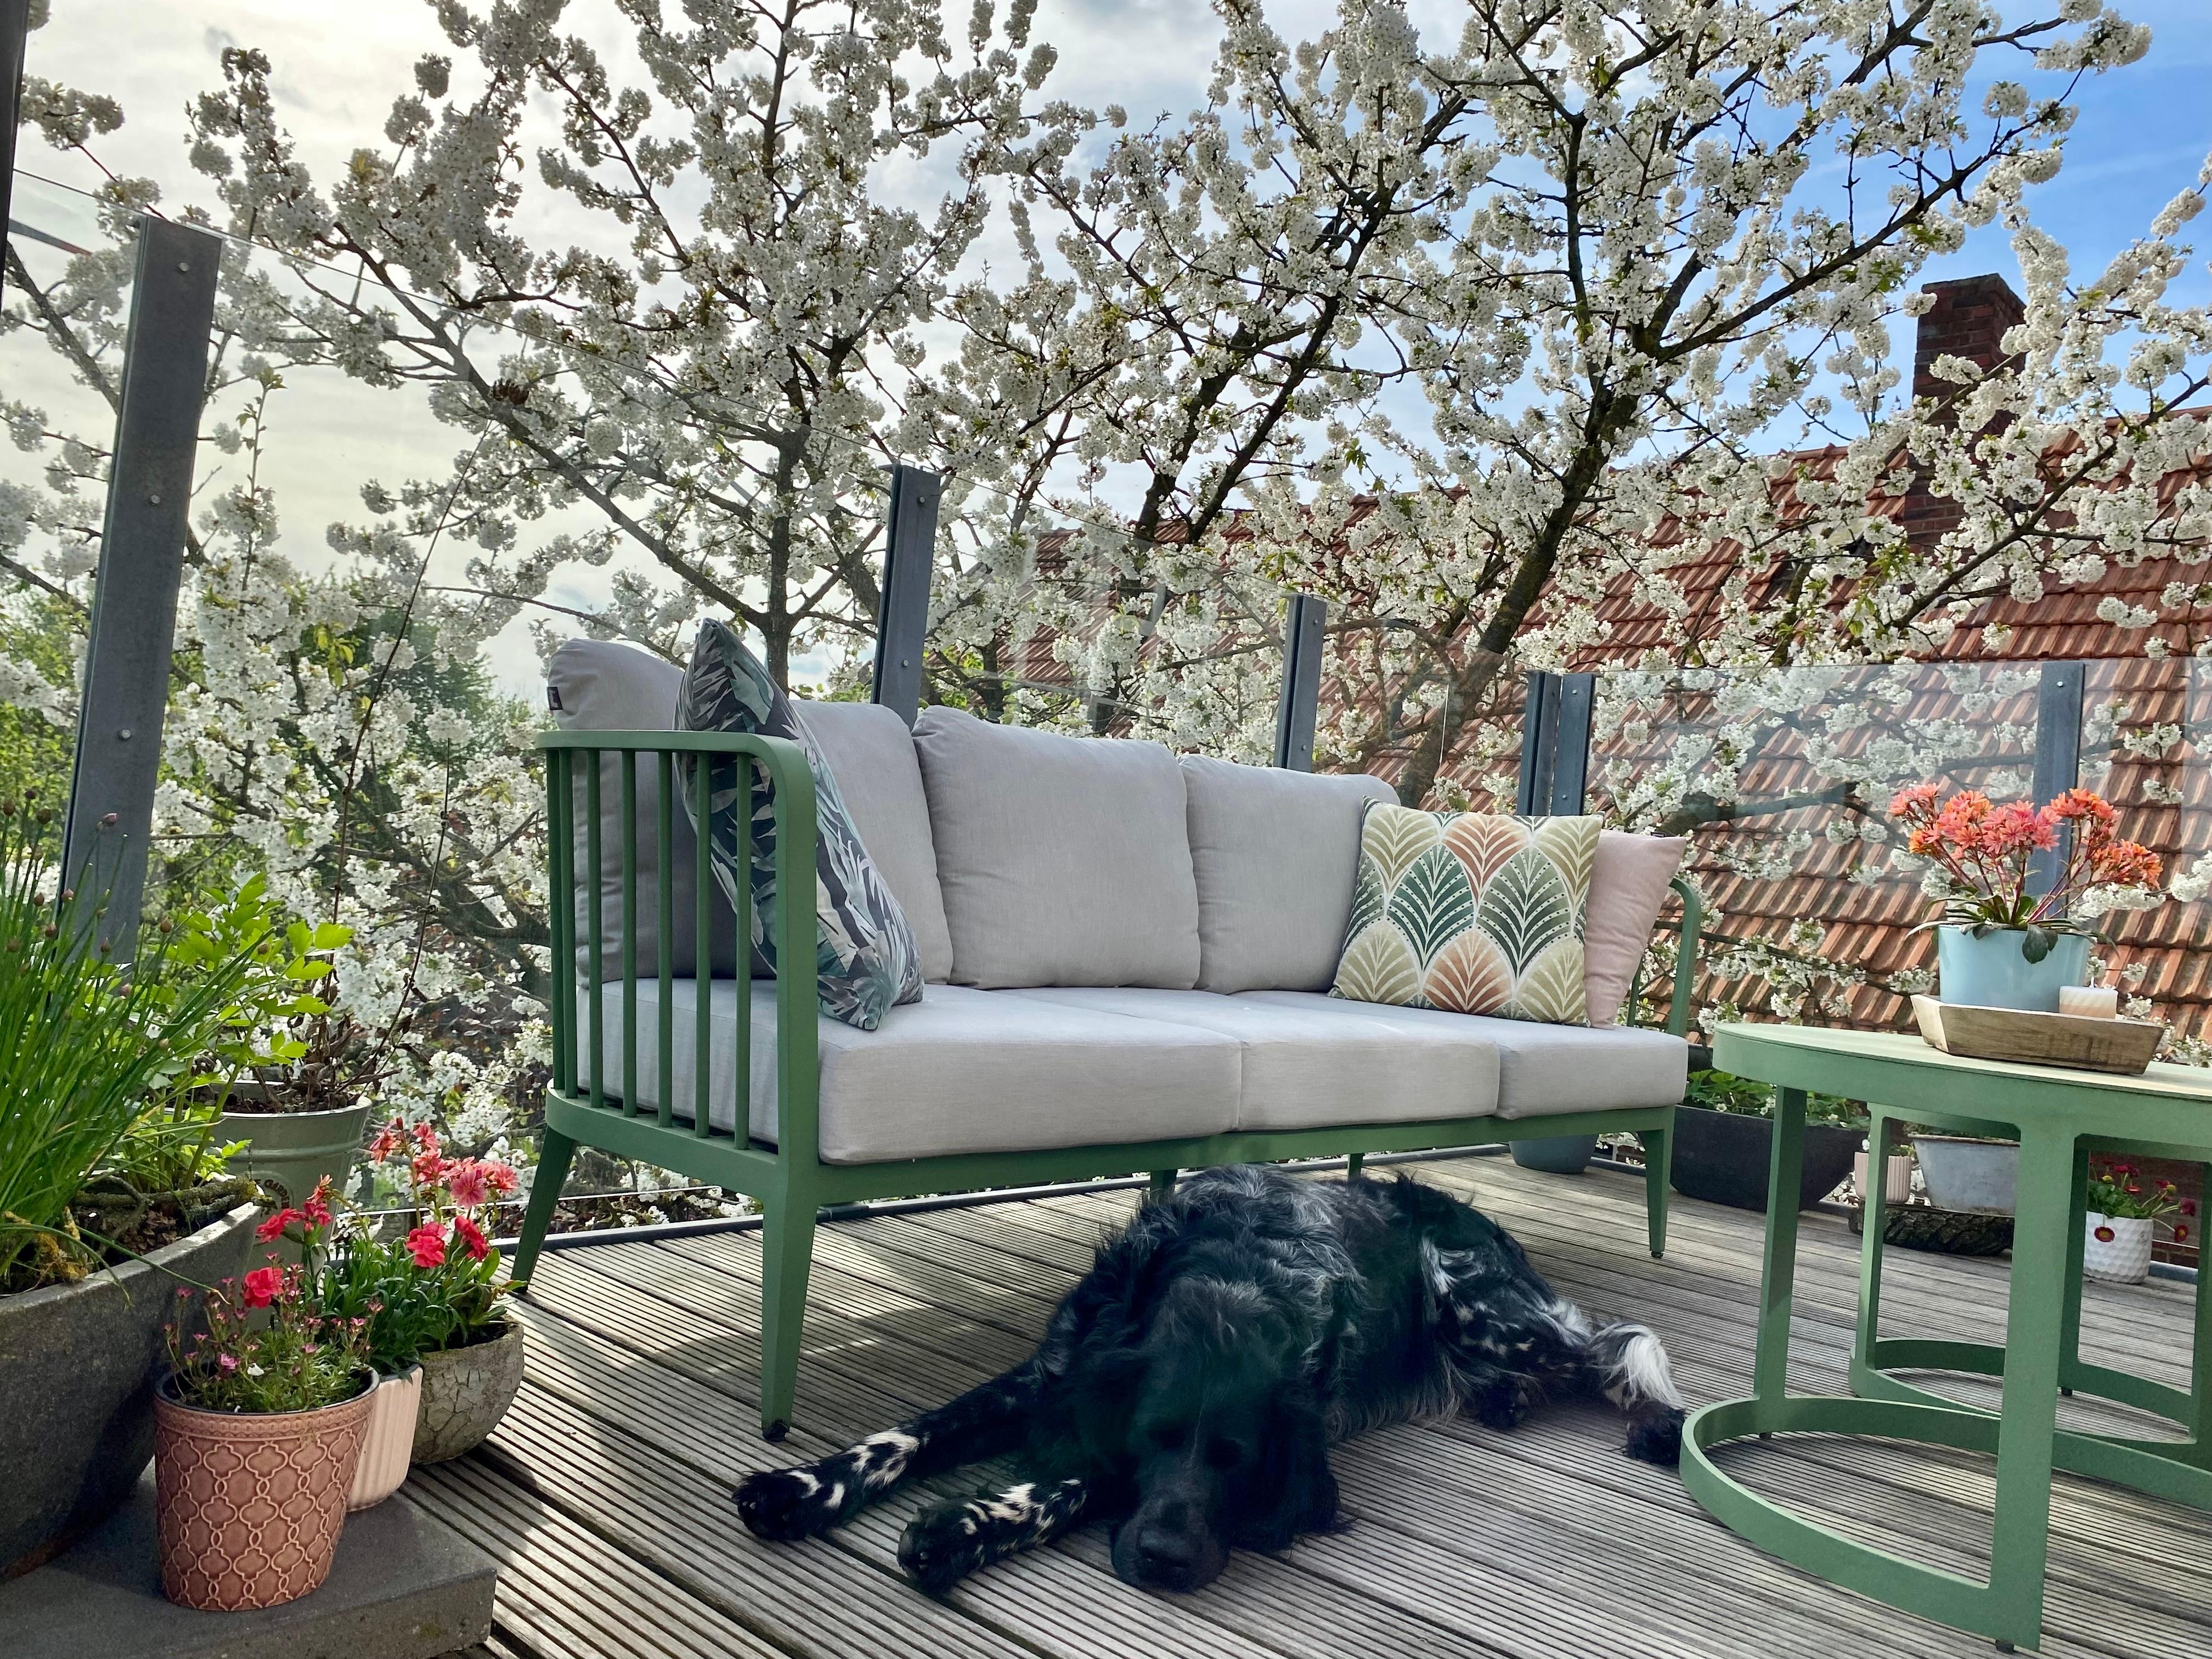 Balkonliebe 💚
#kirschblüte #grünerbalkon #pflanzenliebe #amliebstendraussen 